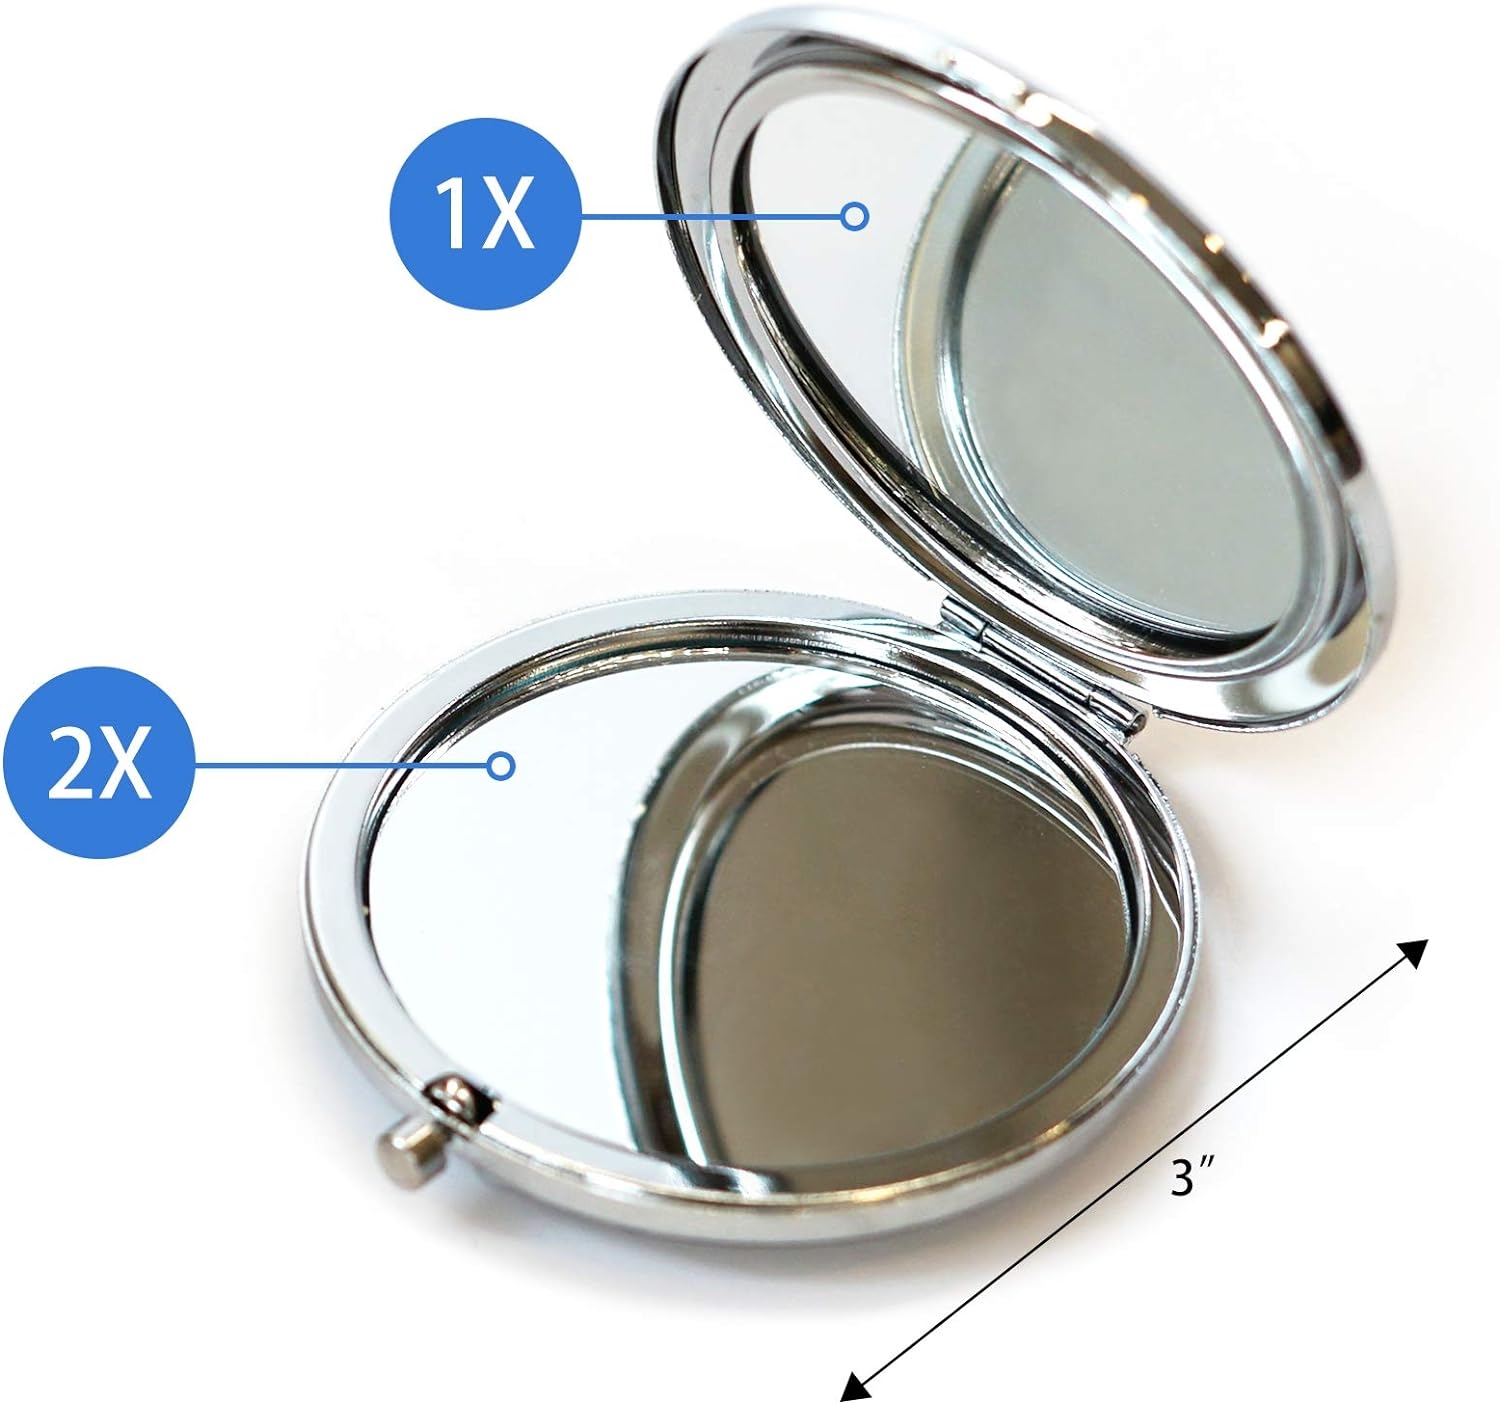 Soomeir Compact Mirror, Pocket Mirror, Mini Mirror for Women, Folding Travel Mirror,Small Mirror for Purse(Bird)